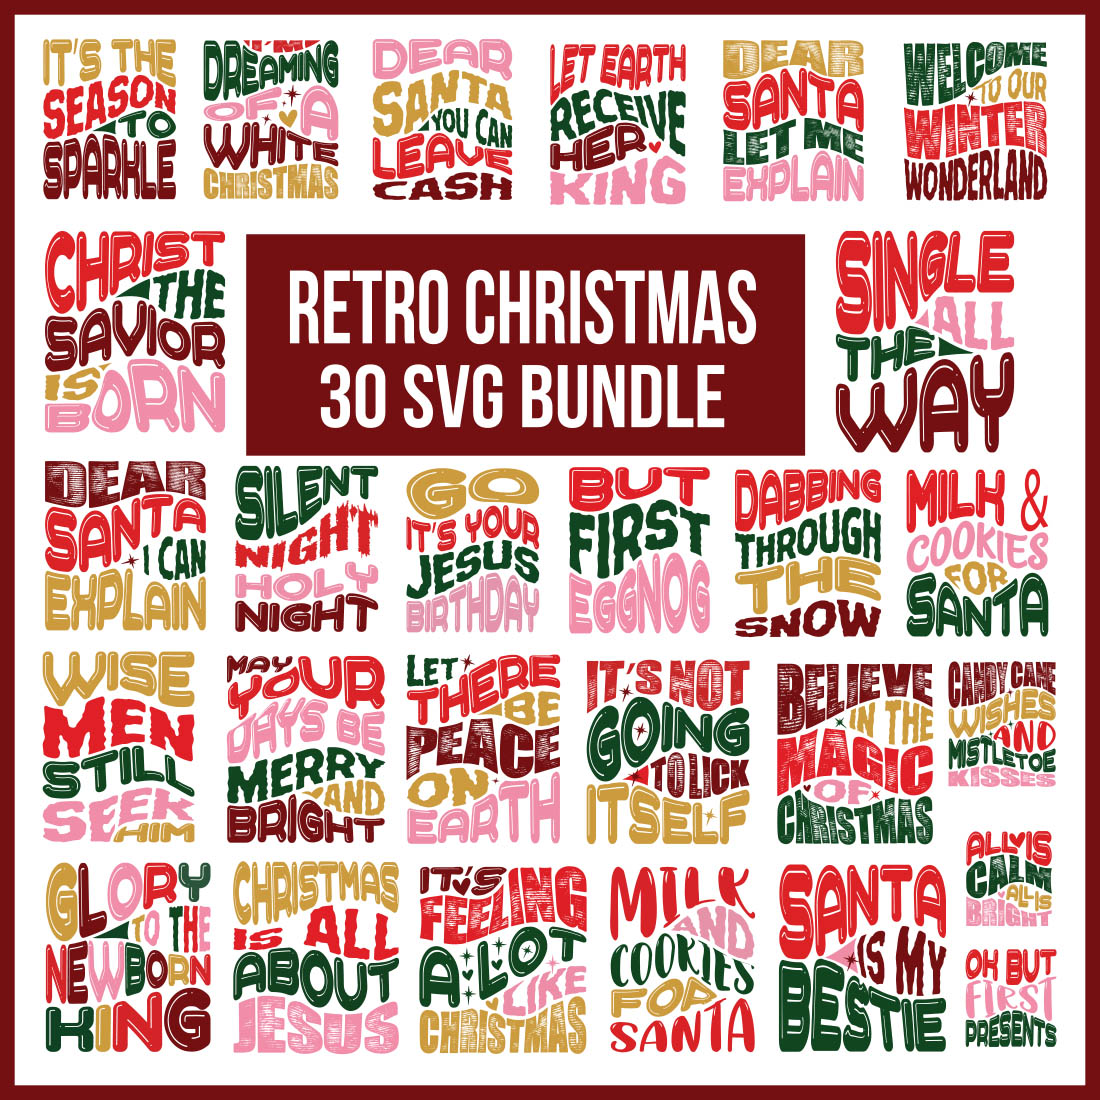 30 SVG Retro Christmas Bundle, Winter SVG Bundle, Christmas SVG Bundle, Santa SVG, Holiday SVG cover image.